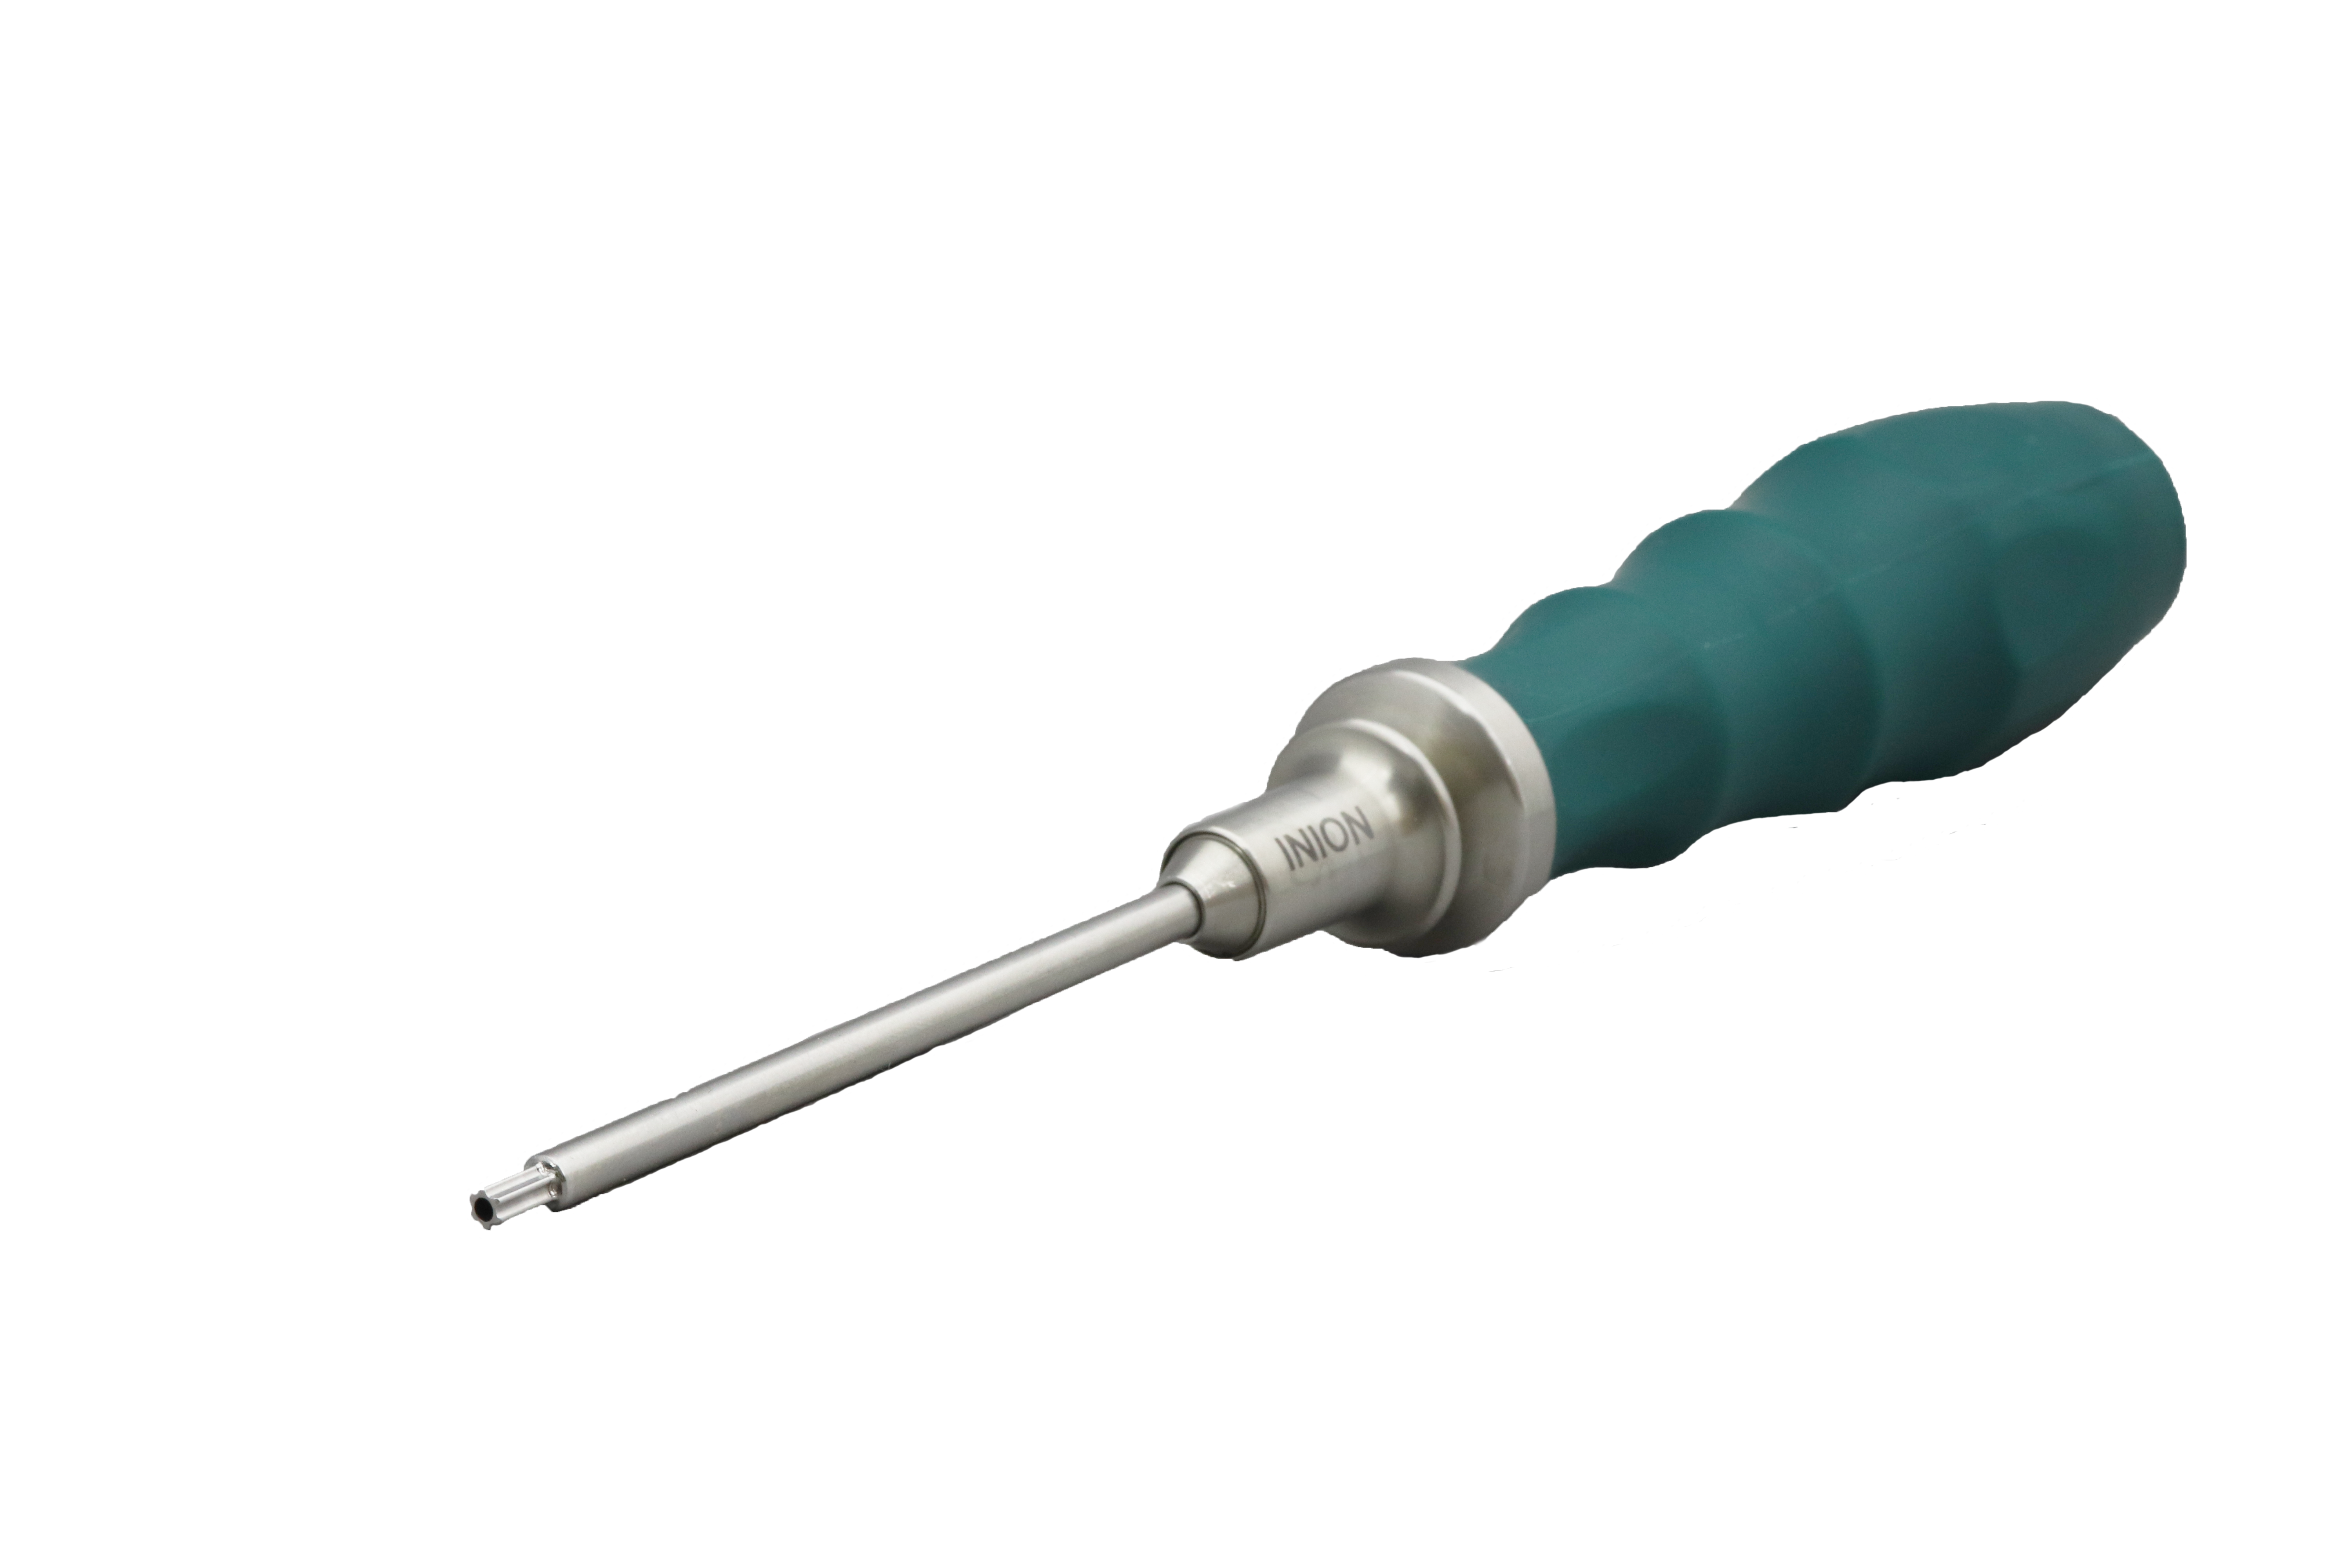 Inion orthopedic screwdriver for compression screws